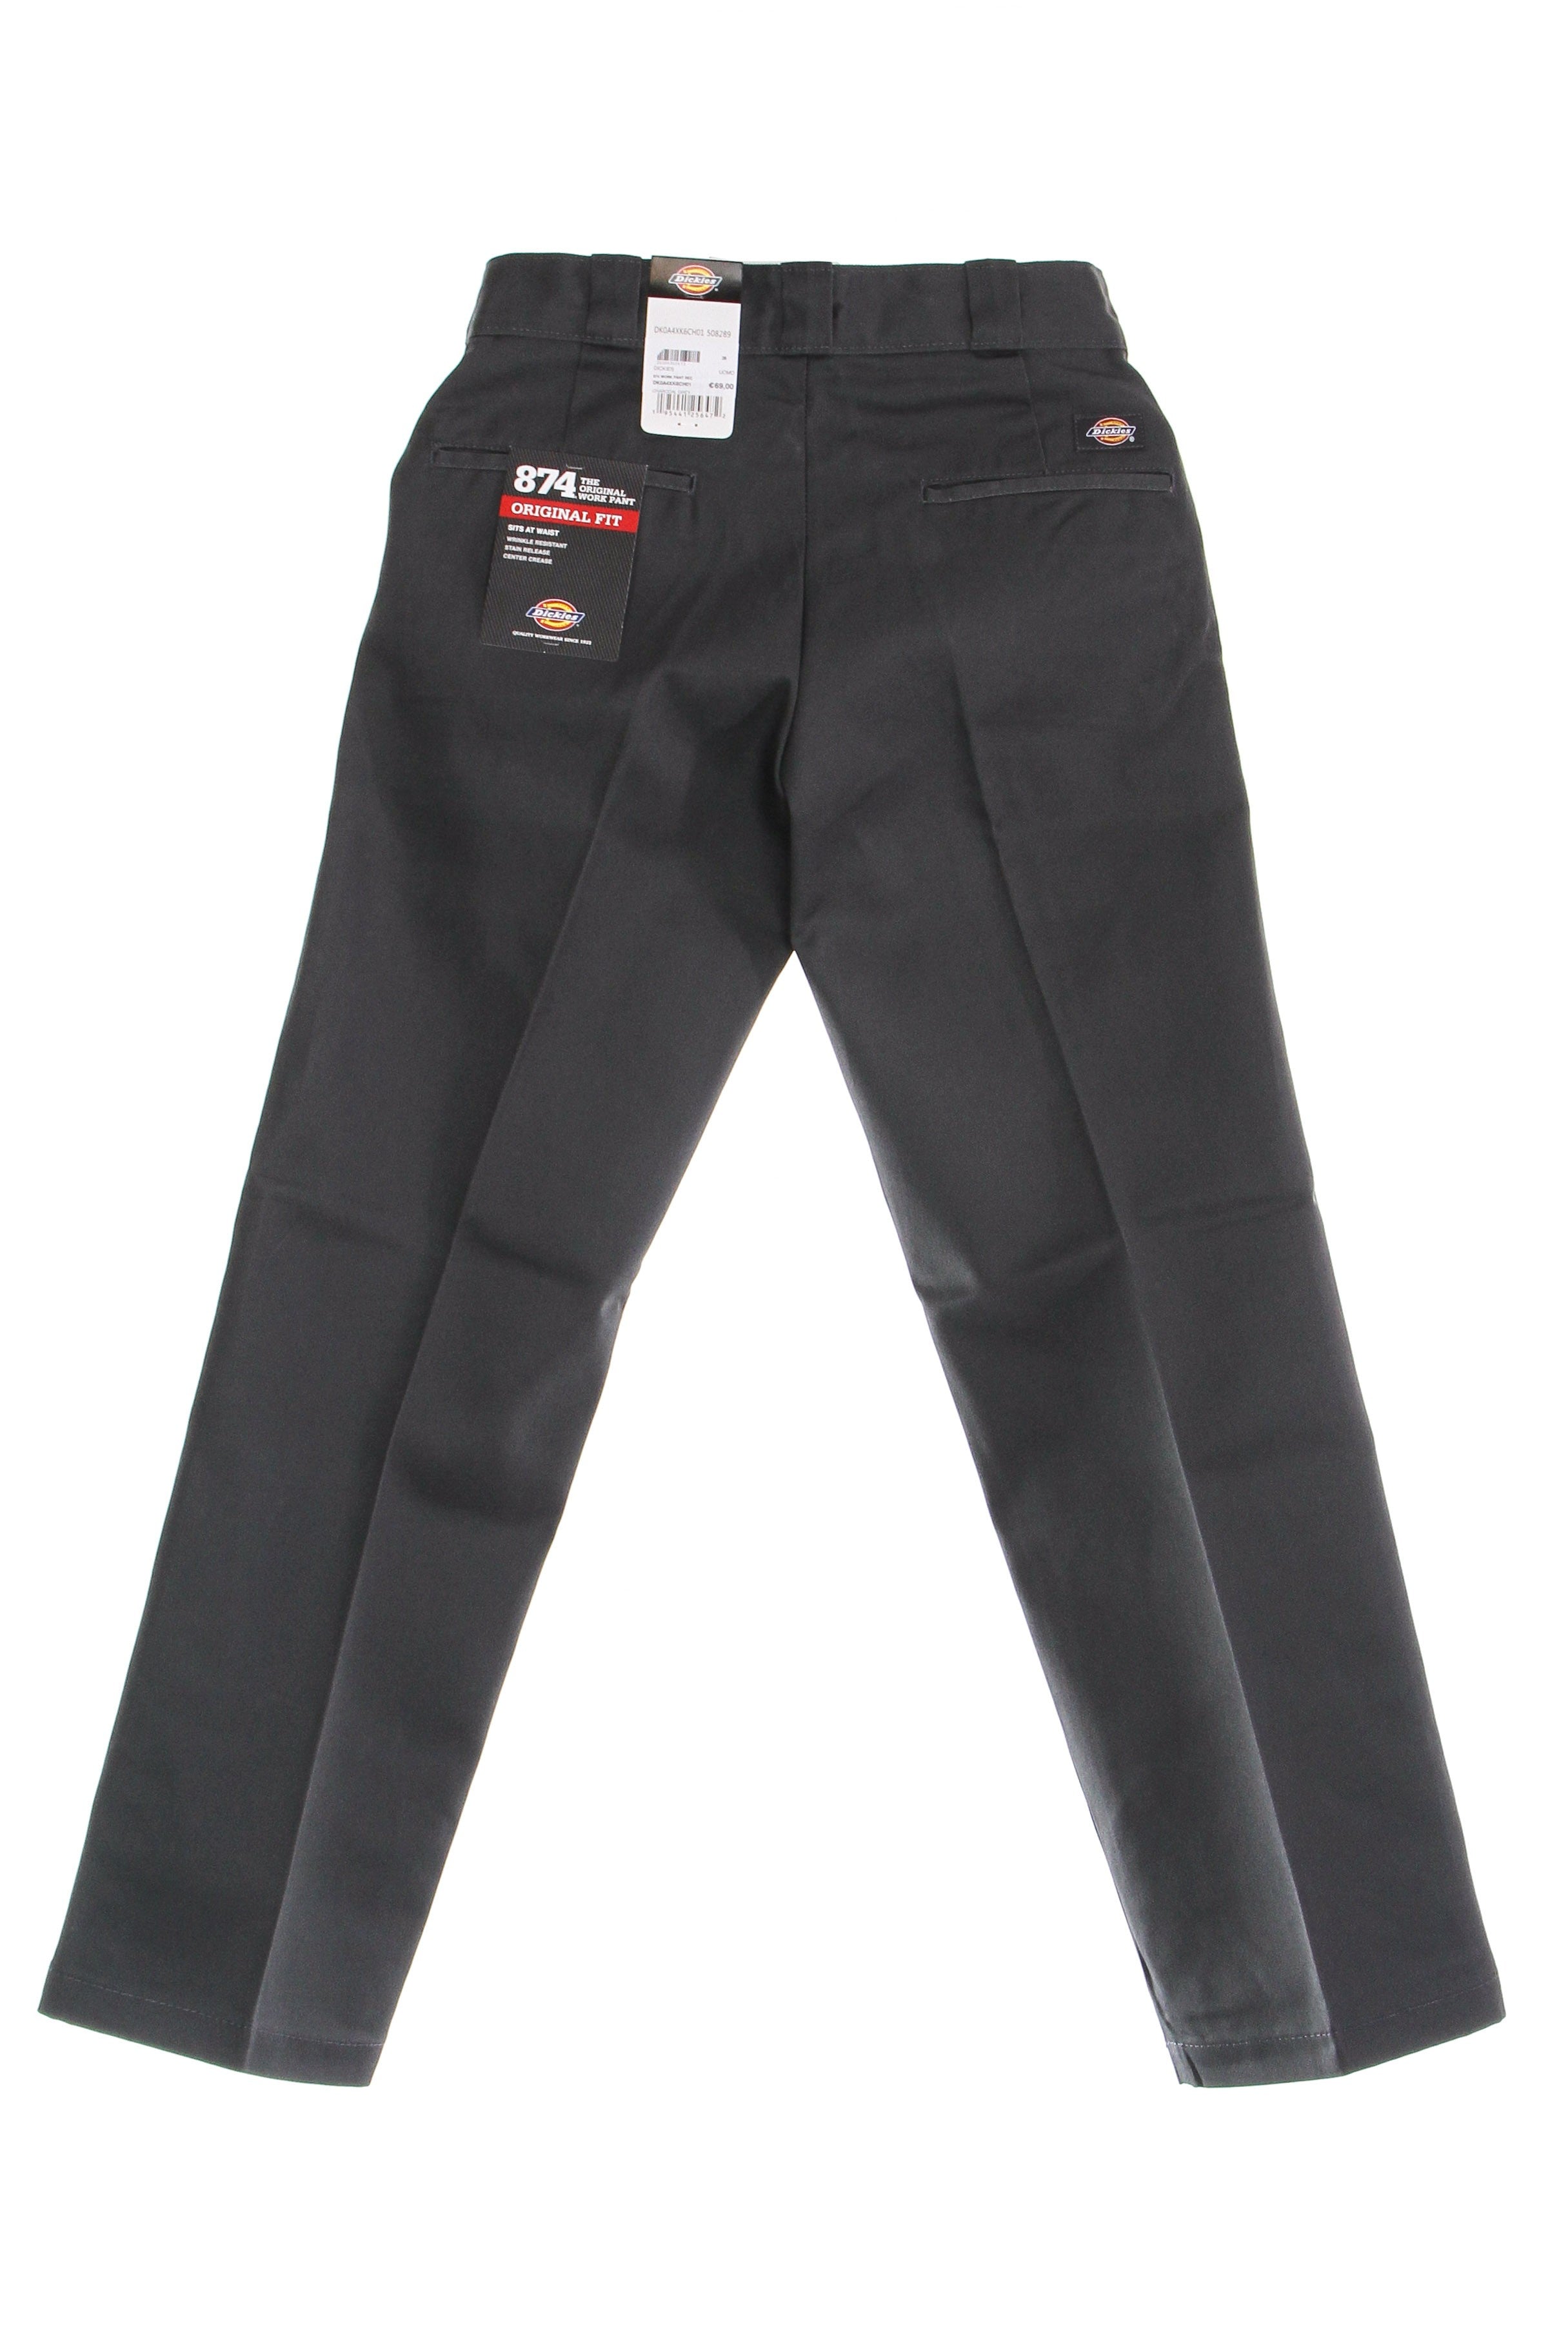 Long Men's Trousers 874 Work Pant Rec Charcoal Grey